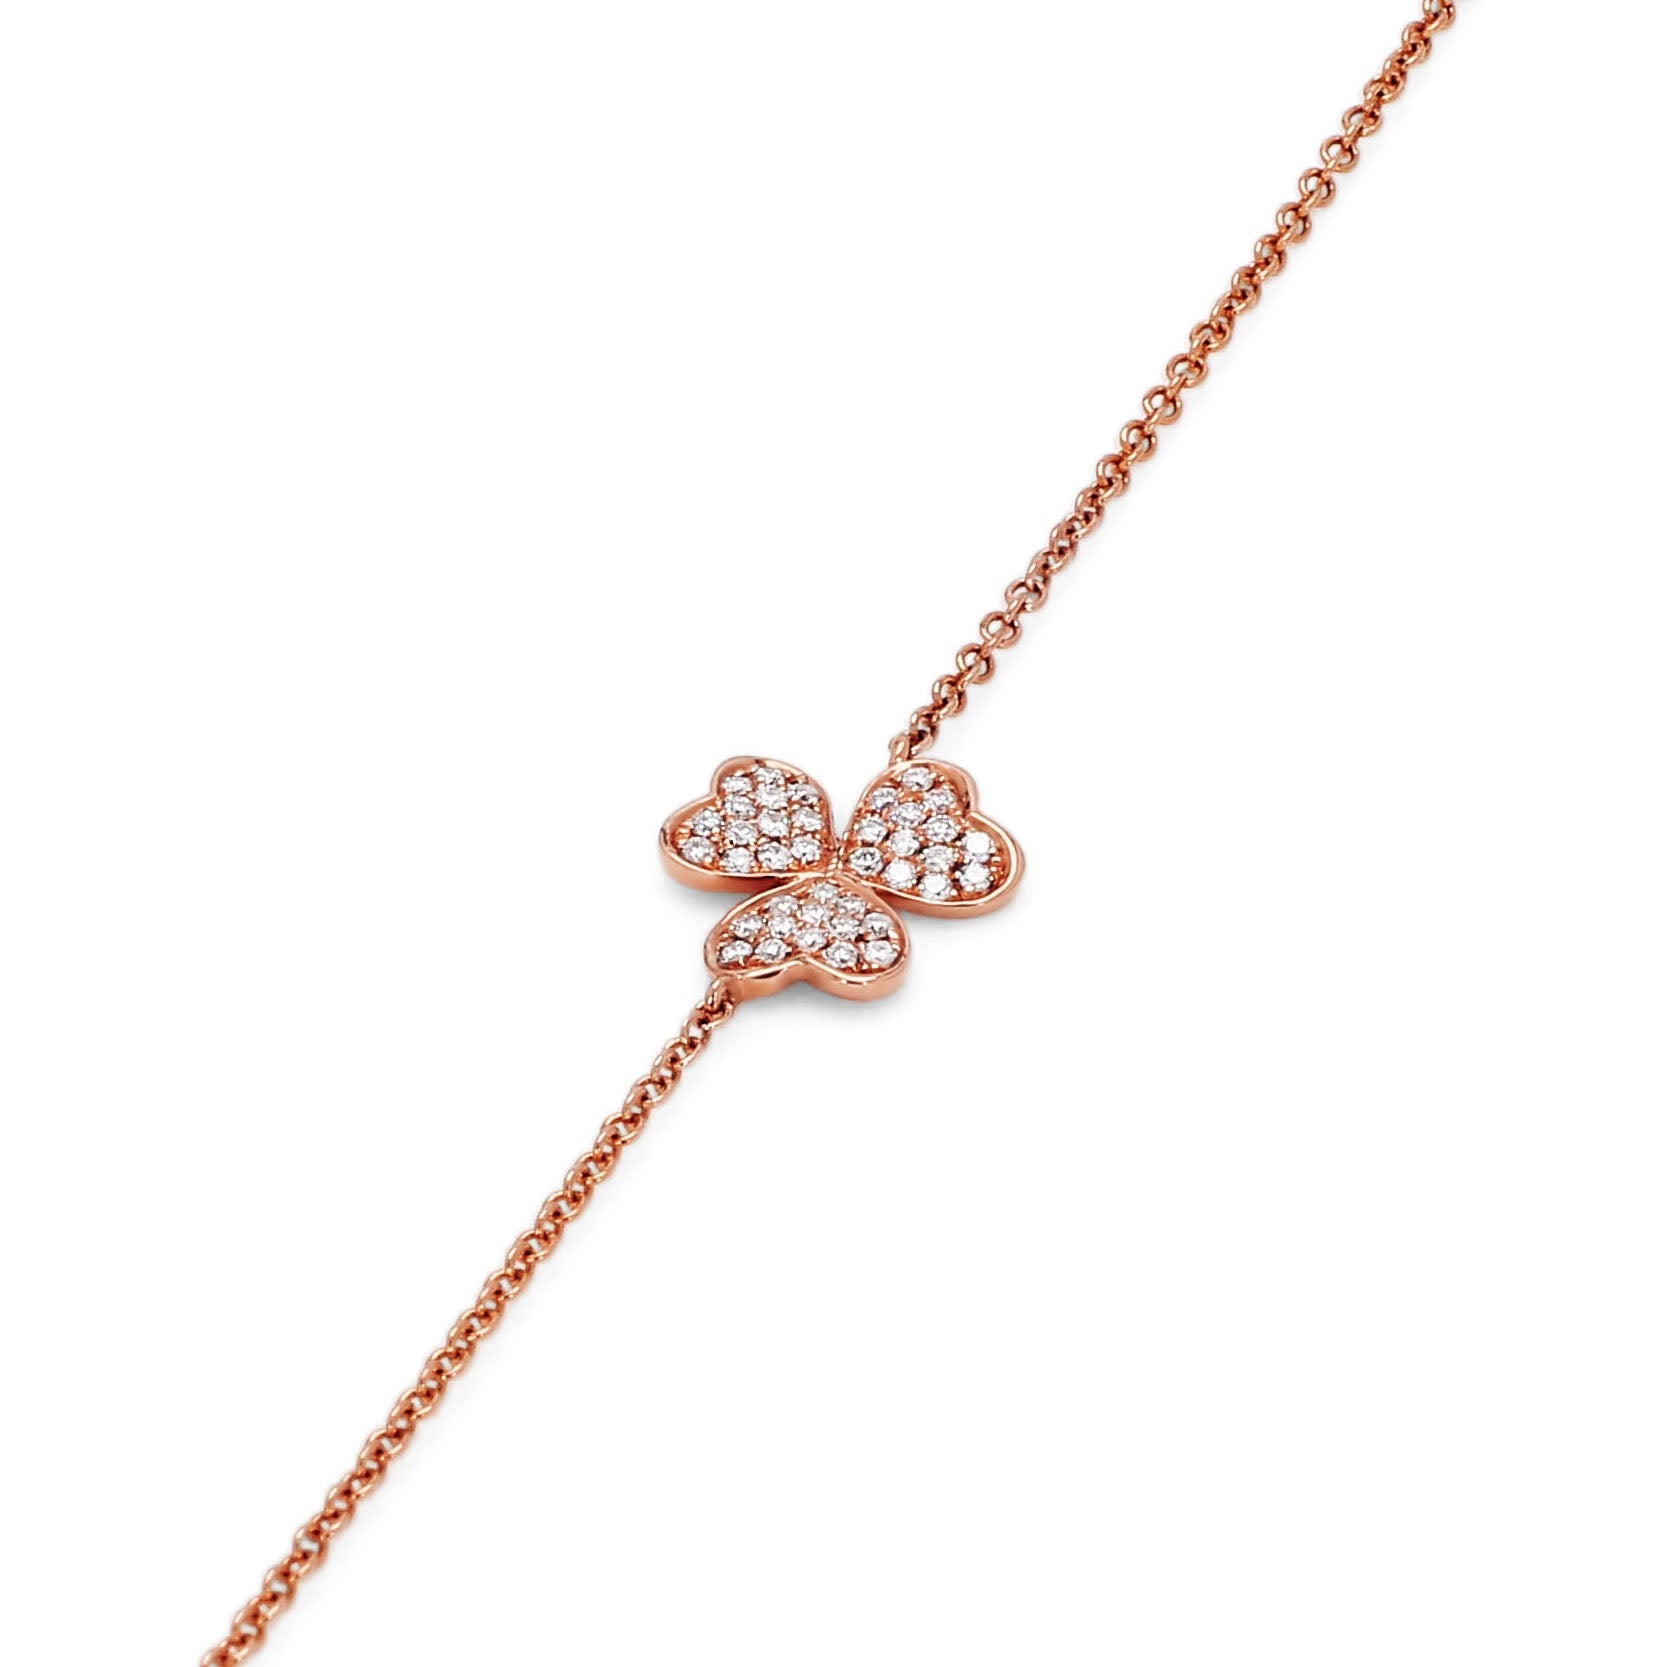 Adamar Jewels Shamrock Bracelet in 18K rose gold set with diamonds